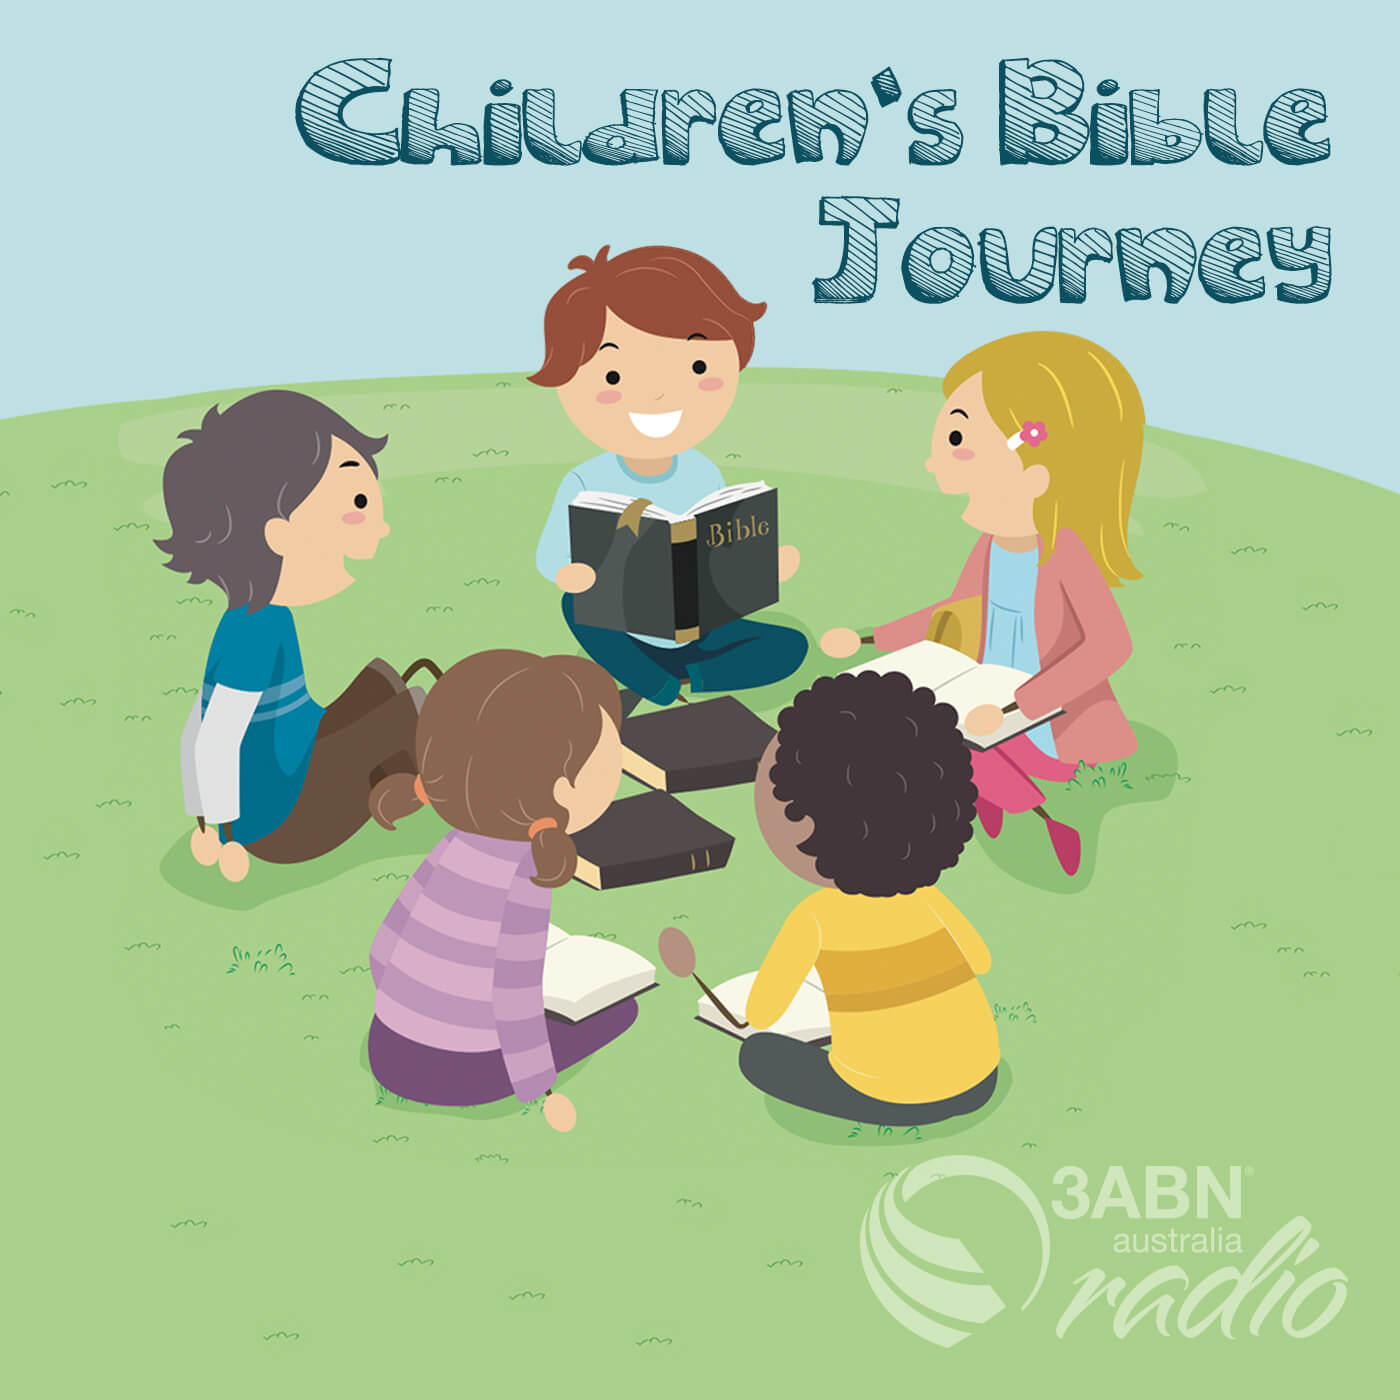 Children's Bible Journey - 2167